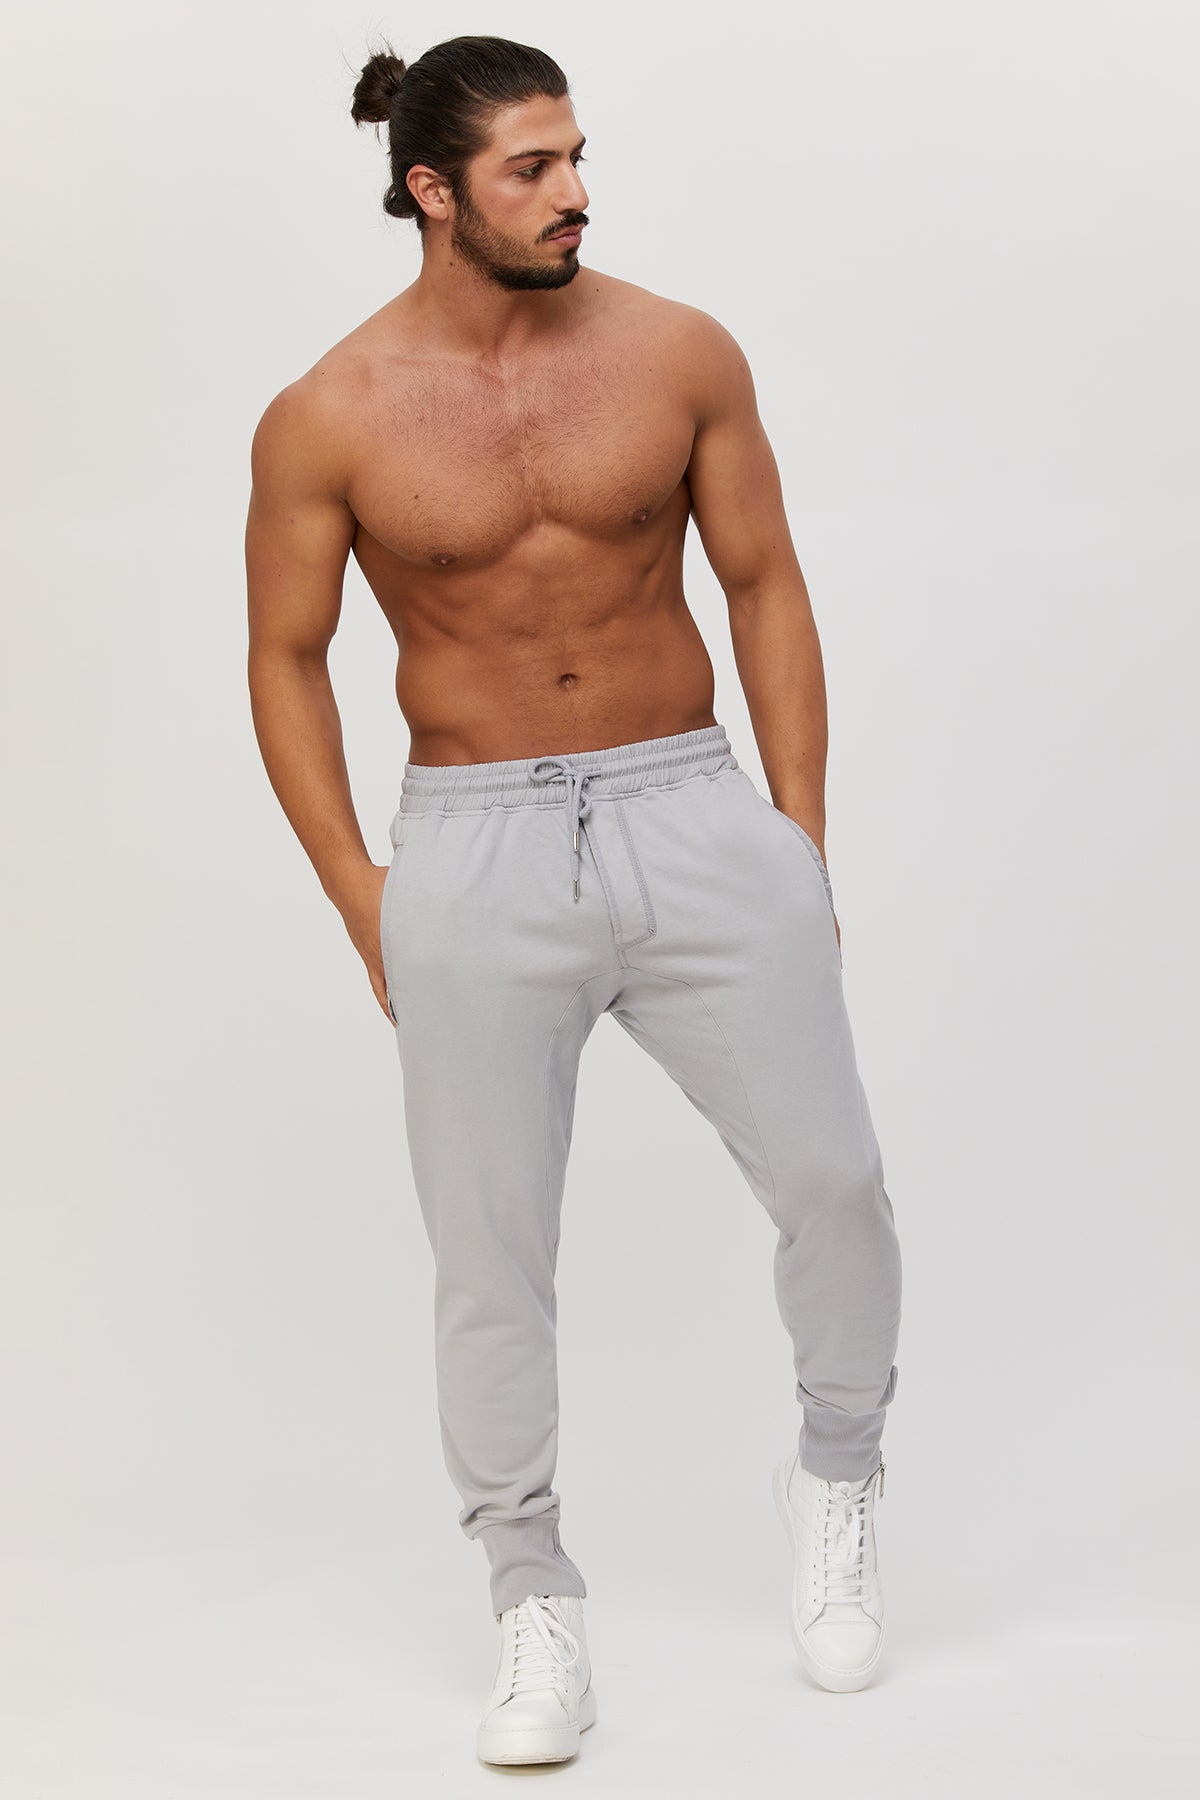 Men's sweatpants - active fleece joggers. 100 % great quality Turkish Pima cotton preshrunk. Zippered pockets. Sports. Gym ,Yoga, Fitness.